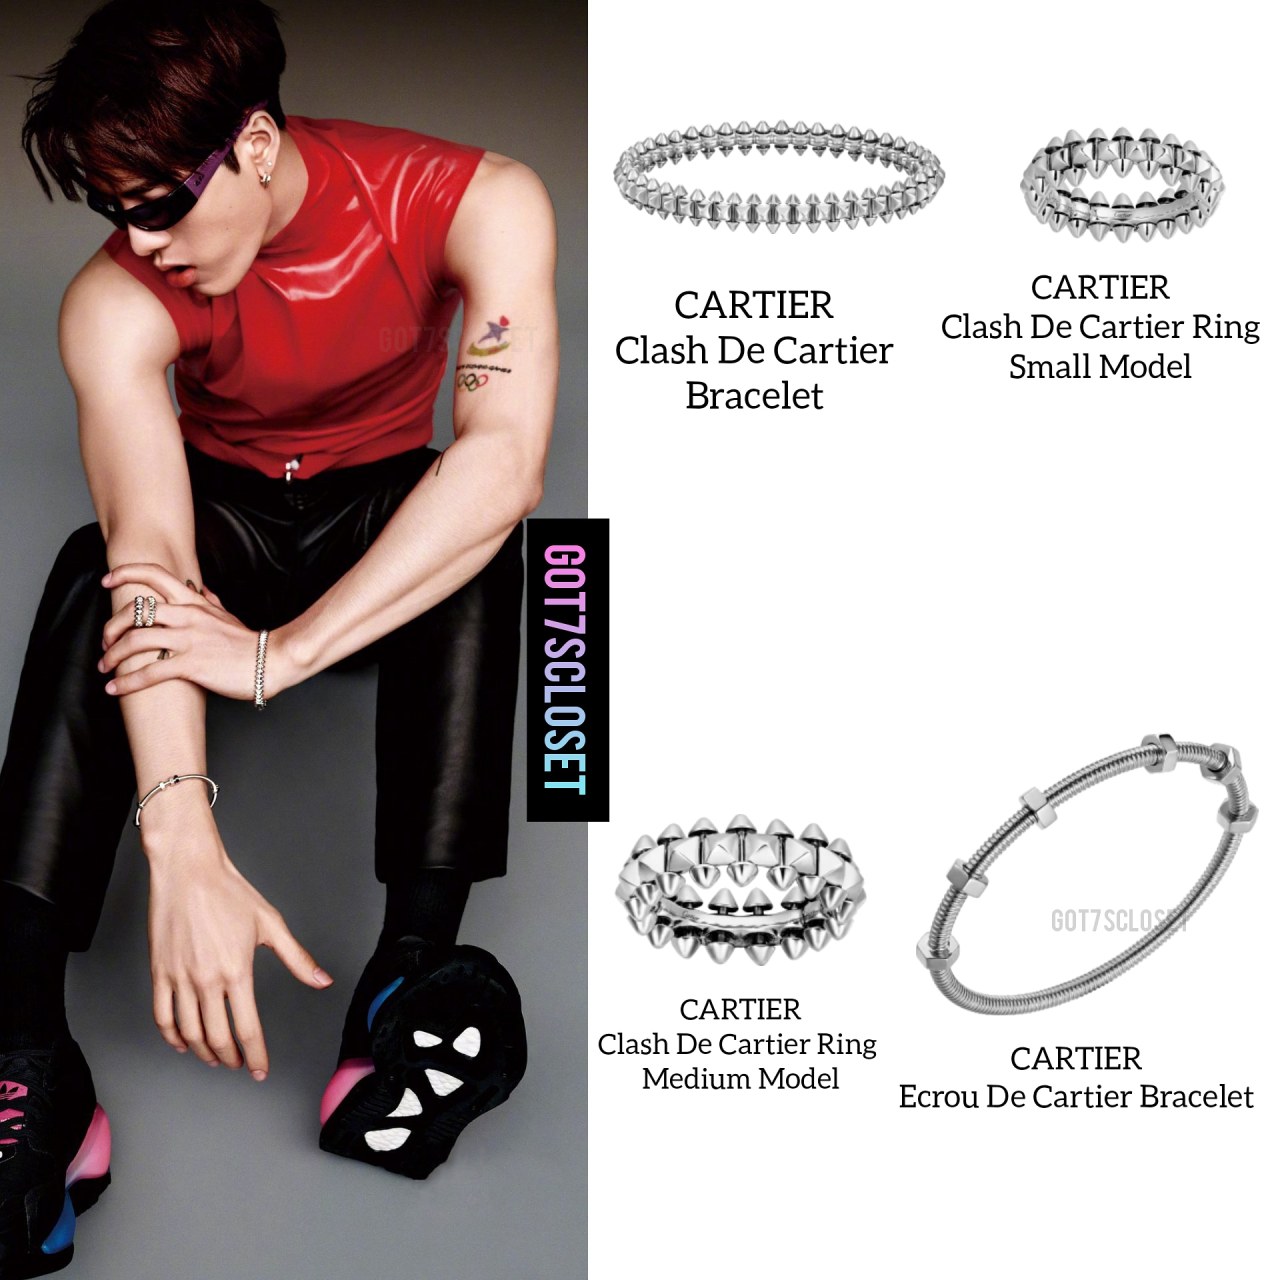 jackson wang cartier bracelet